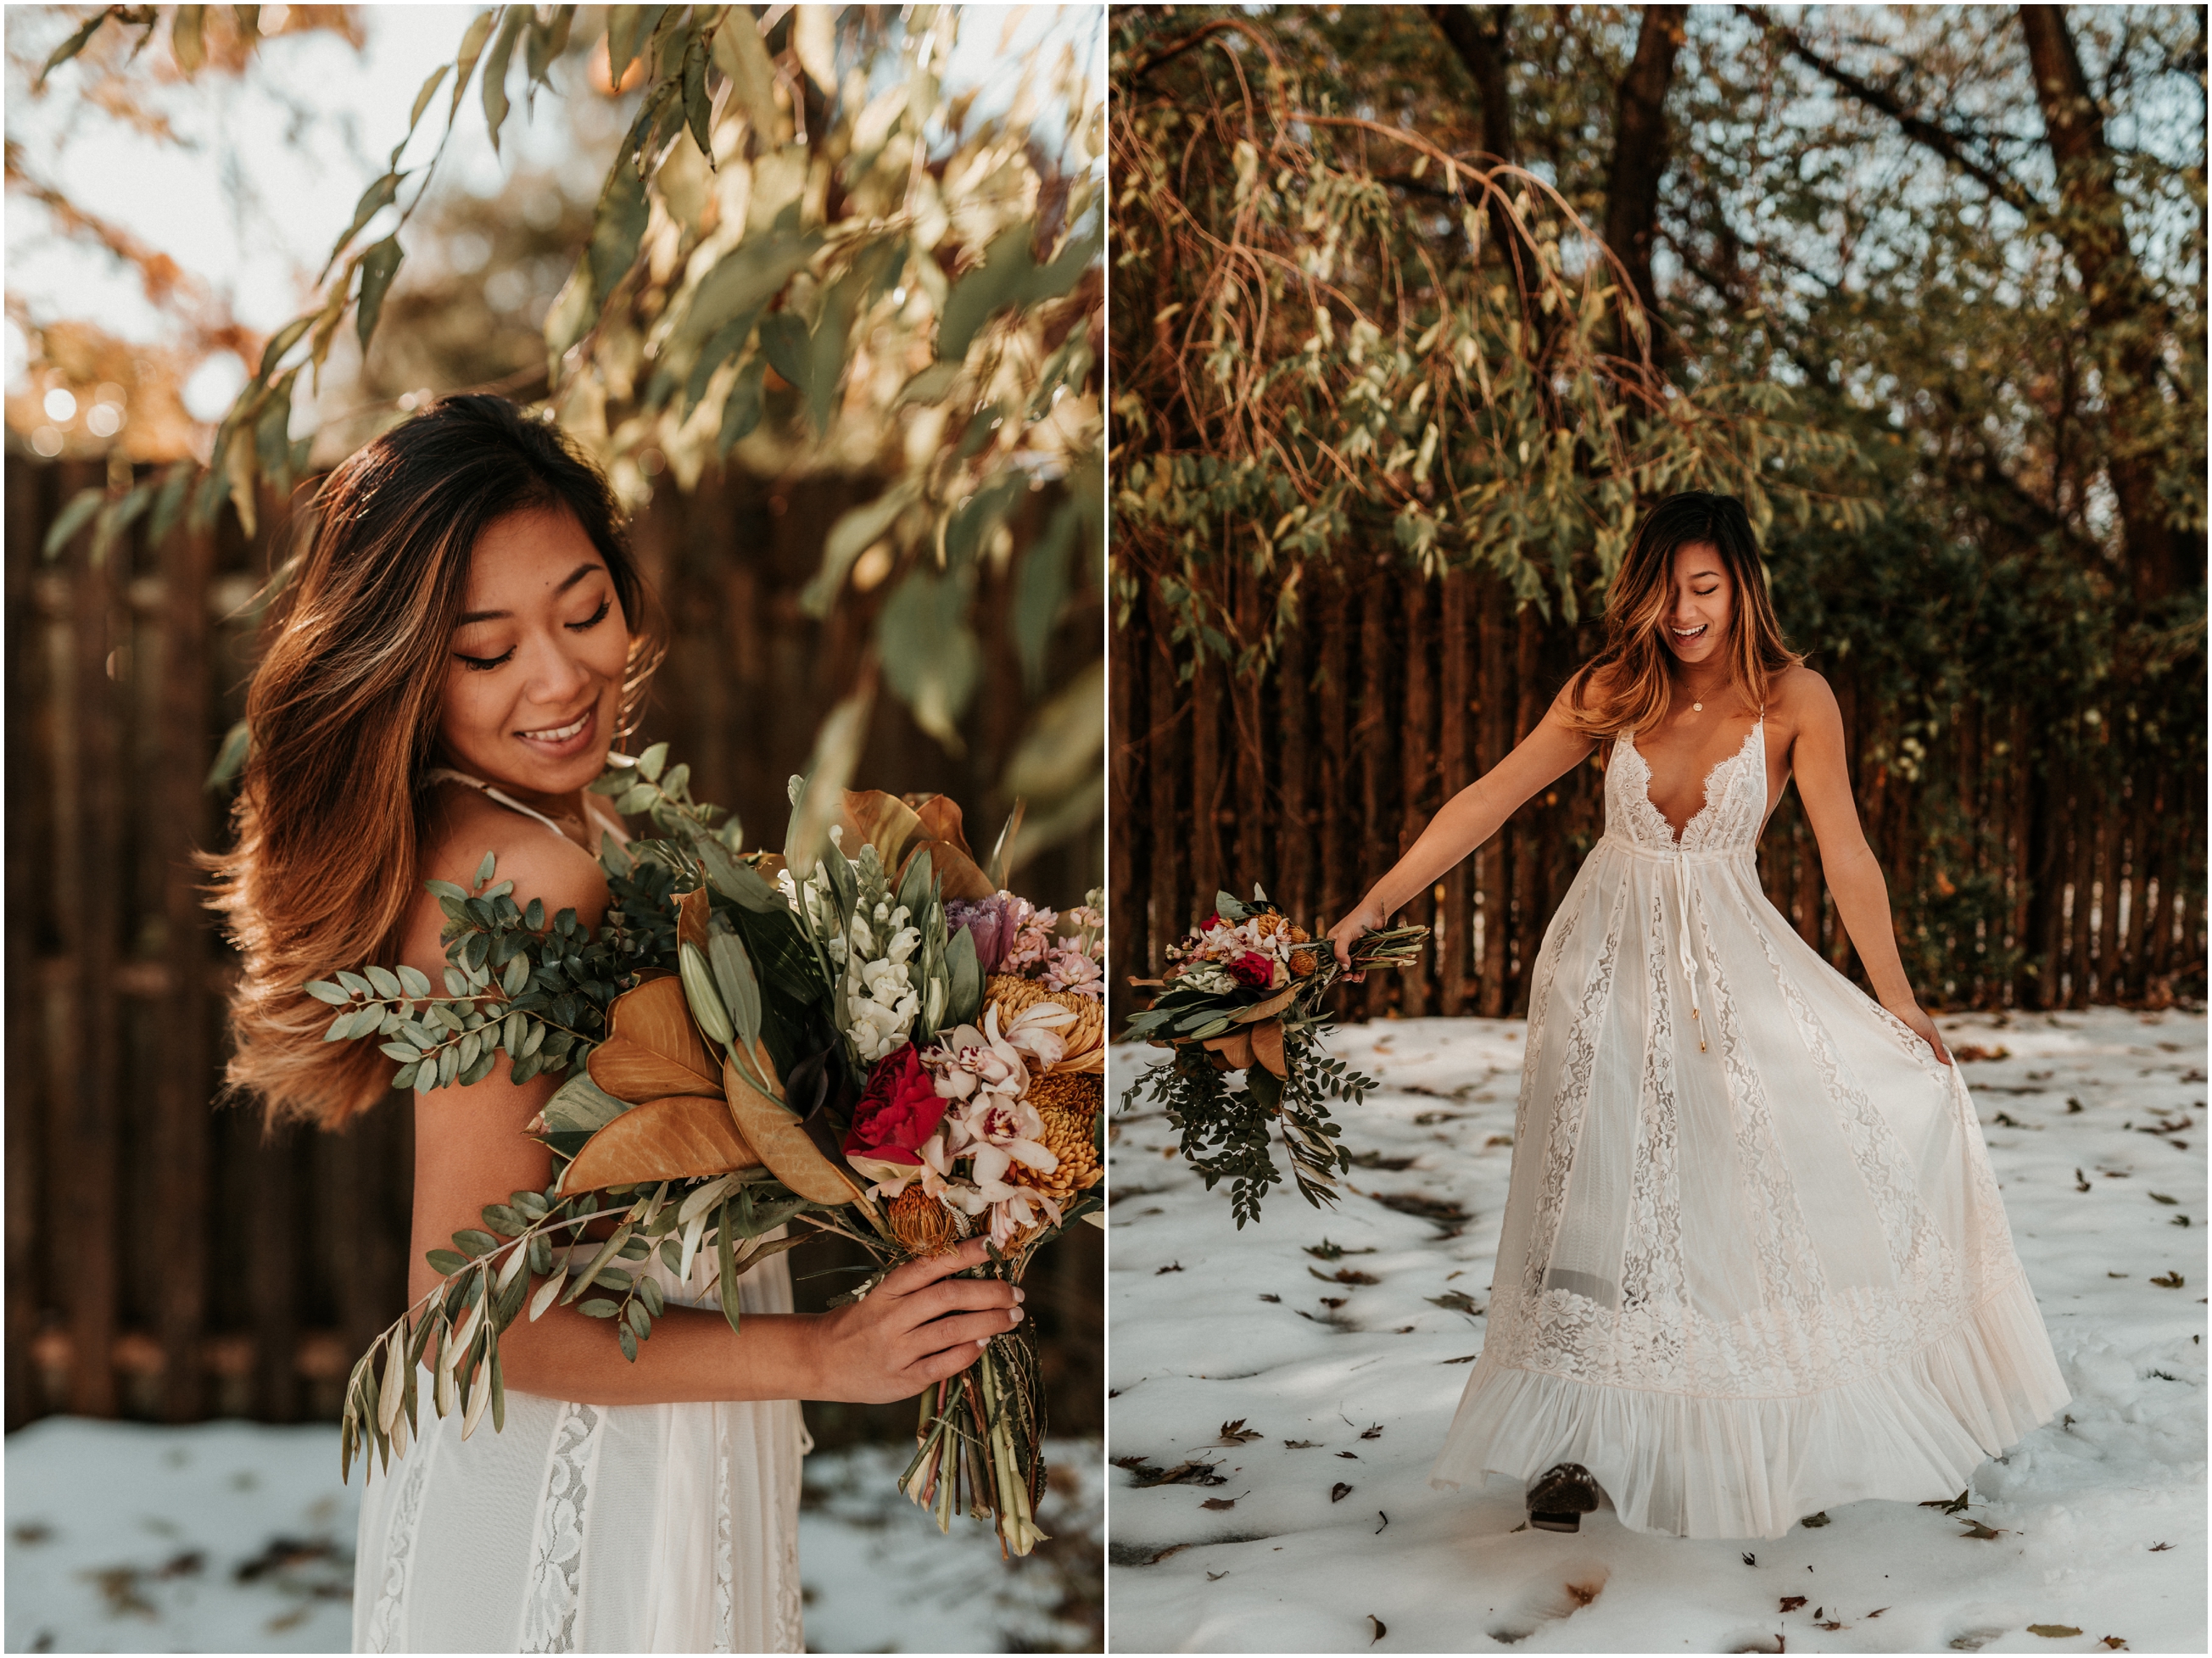 Styled Bridal Inspiration Snow Farmgirl Flowers Hunter Boots Free People Nature Backyard New Jersey NJ Wedding Photographer